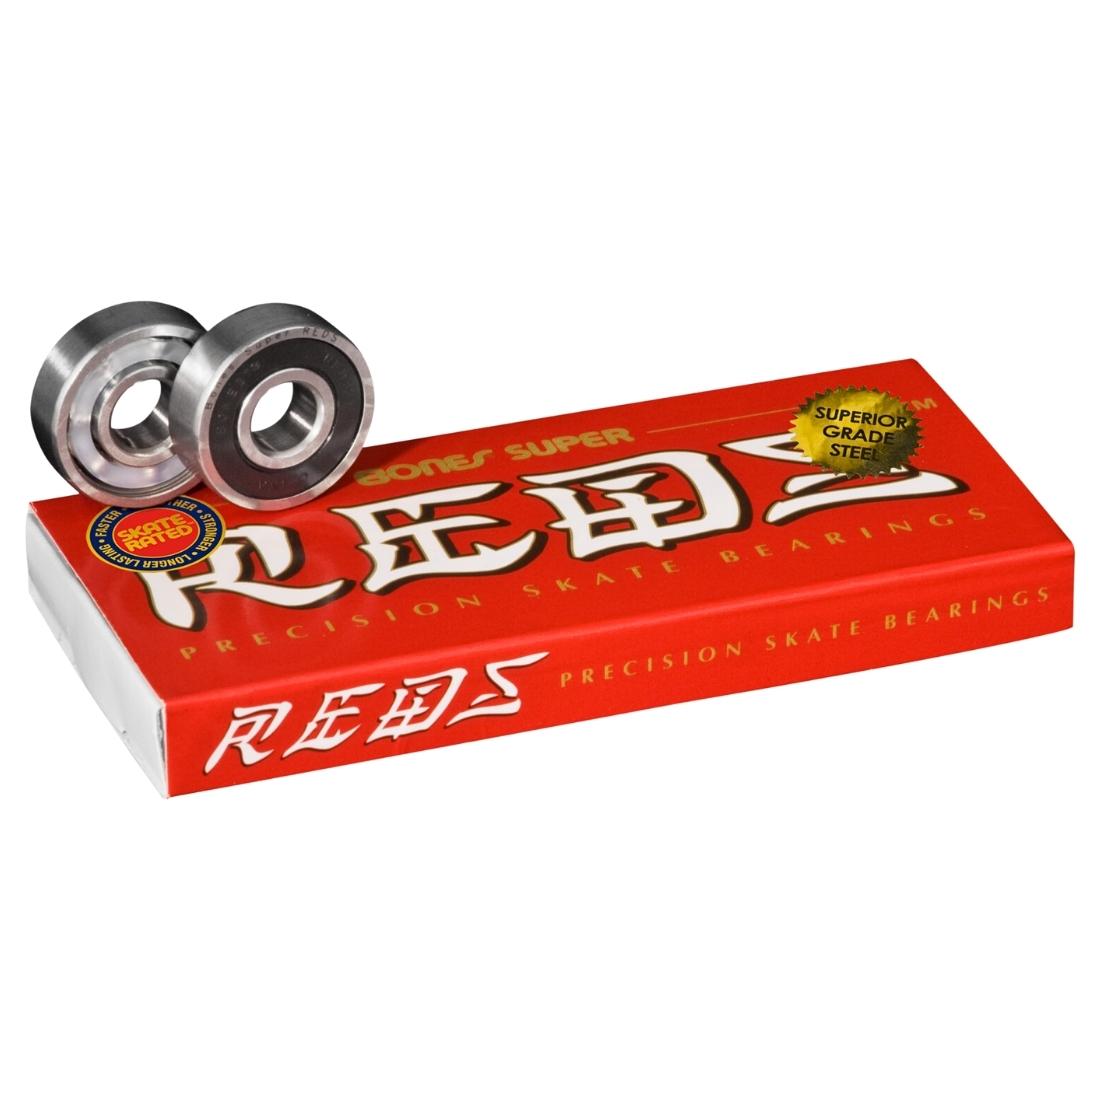 Bones Super Reds Precision Skateboard Bearings - Super Reds - Skateboard Bearings by Bones